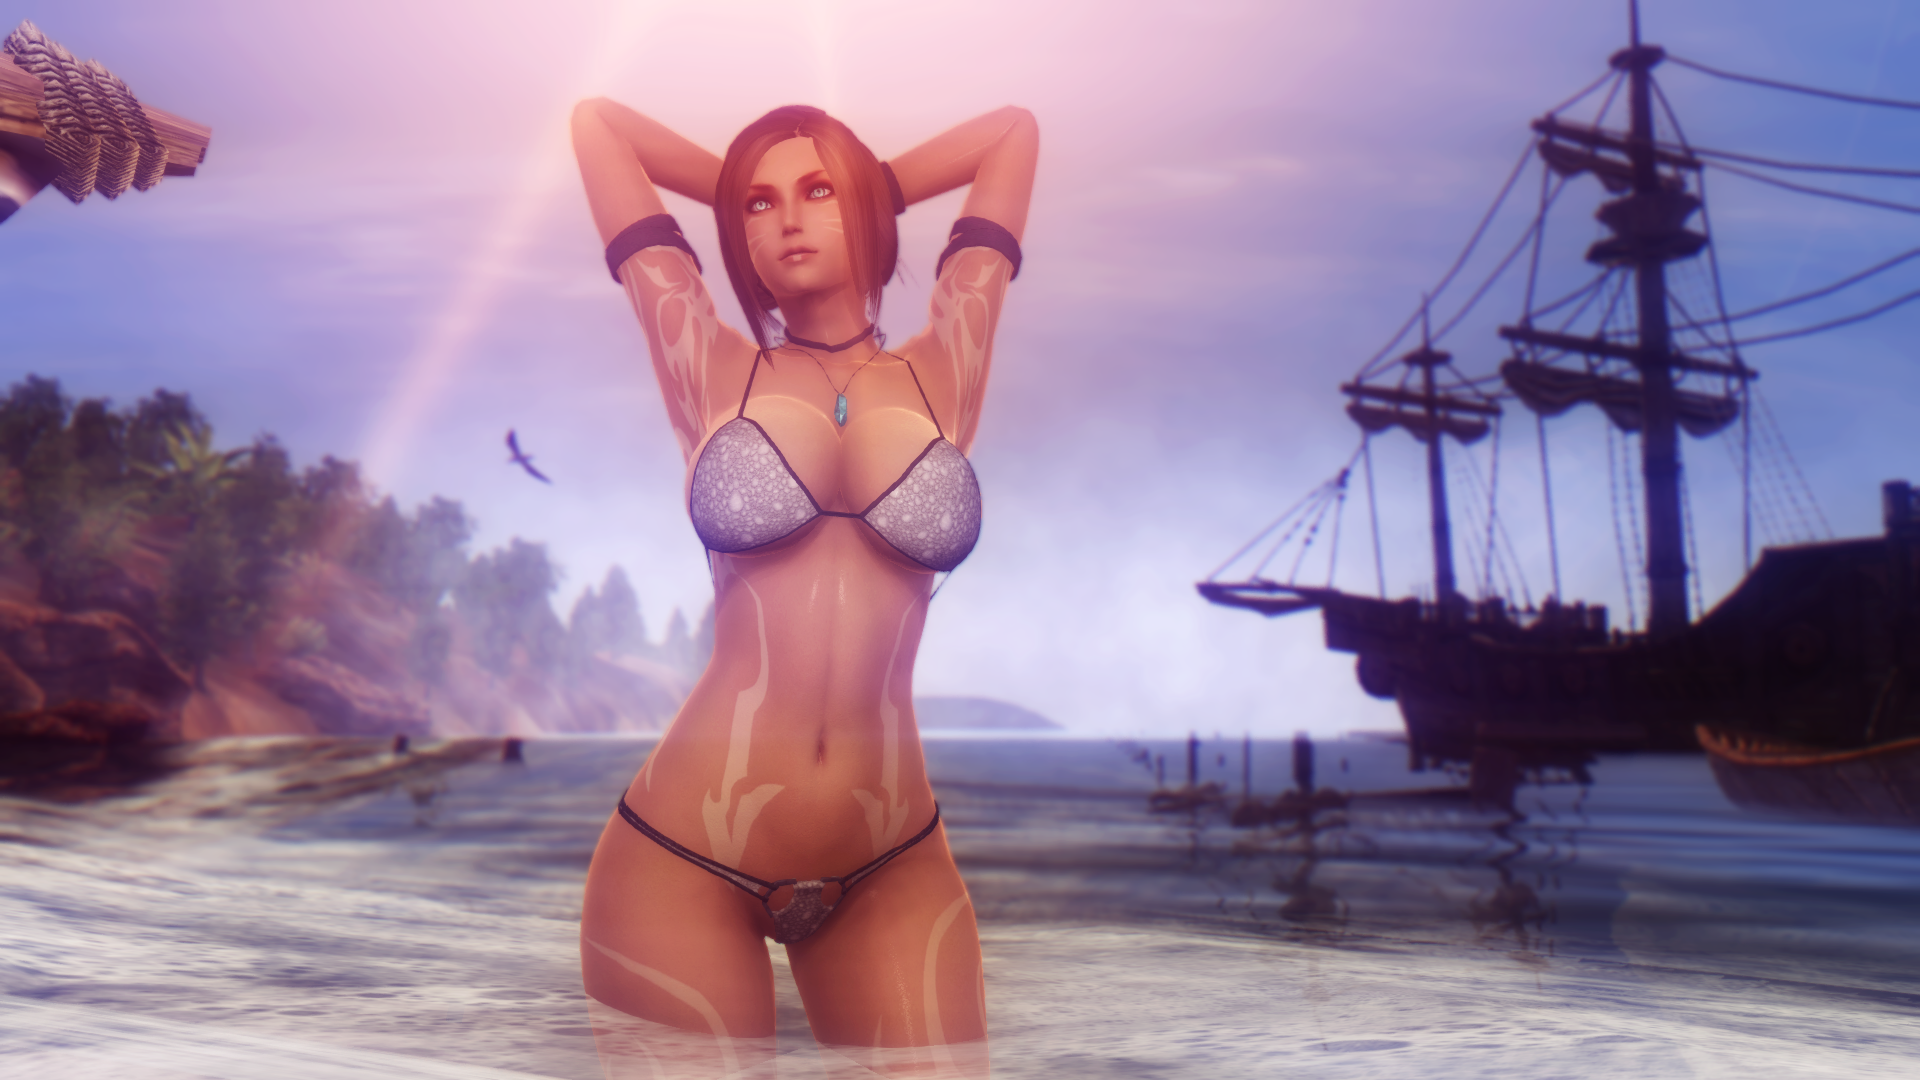 General 1920x1080 The Elder Scrolls IV: Oblivion women video games tattoo brunette beach ship bikini big boobs arms up CGI